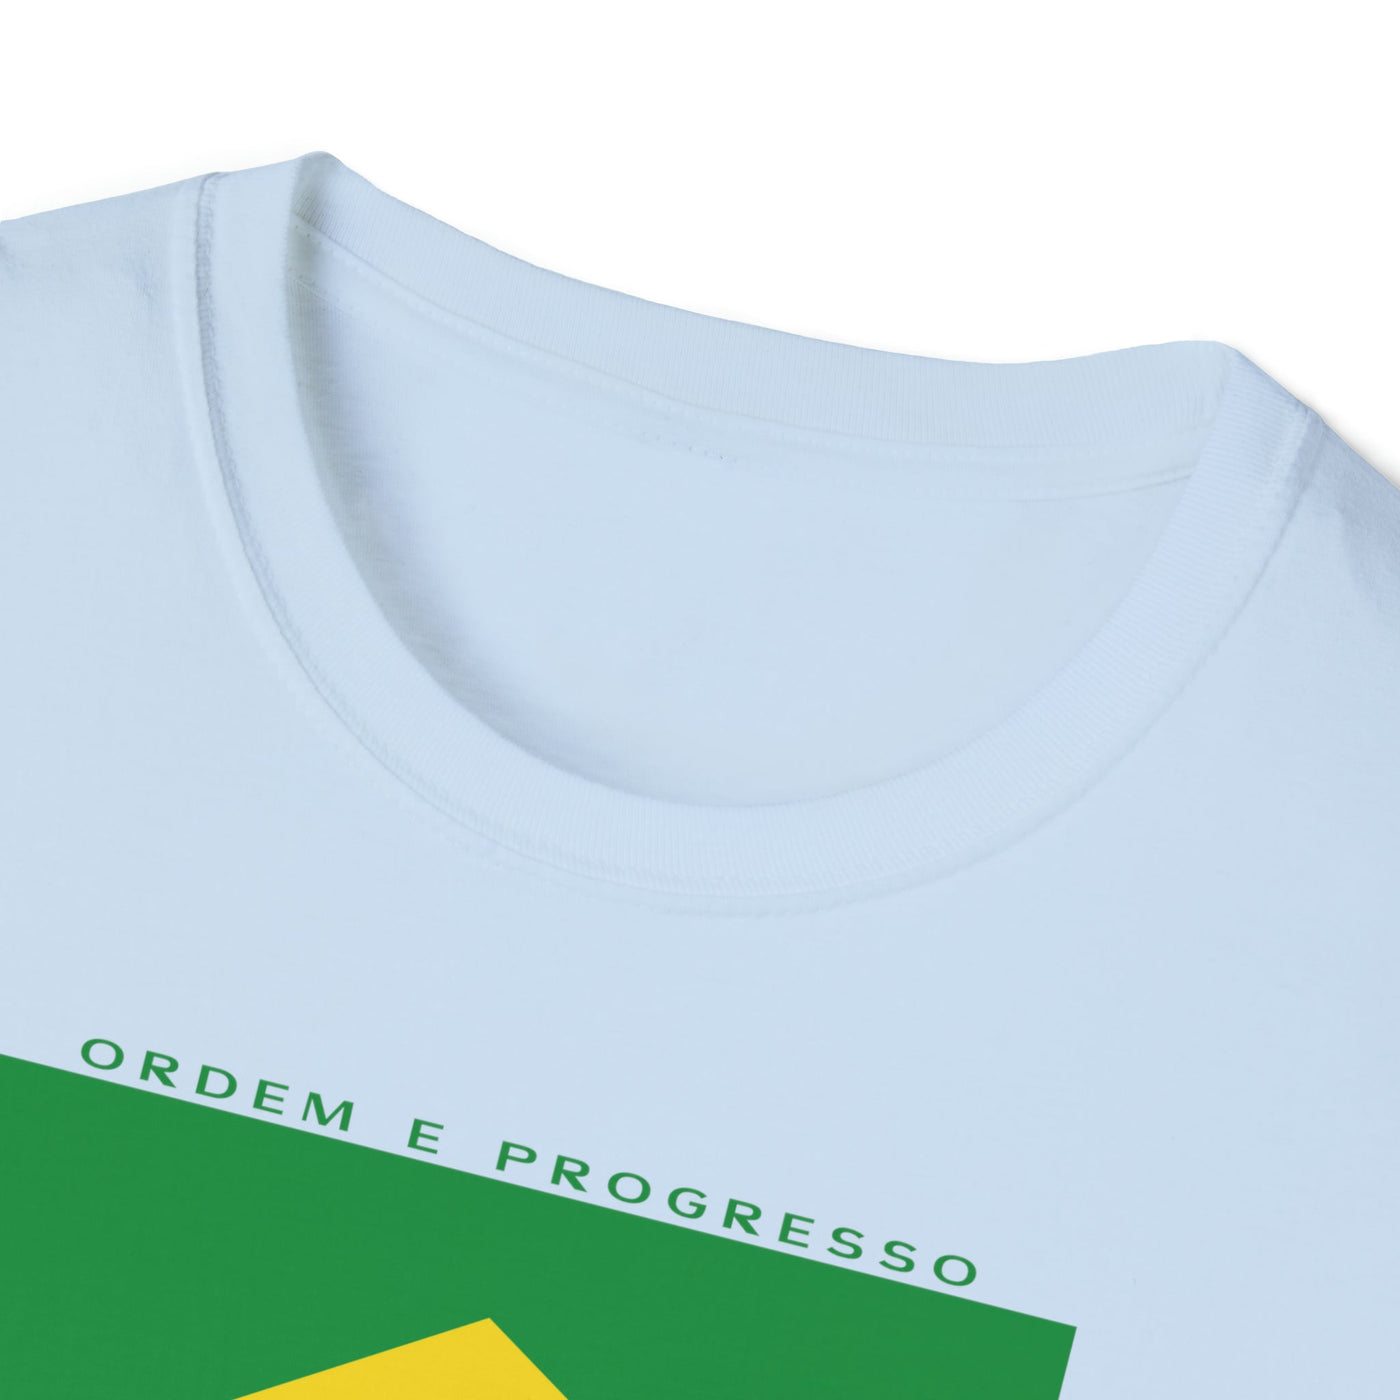 Brazil Retro T-Shirt - Ezra's Clothing